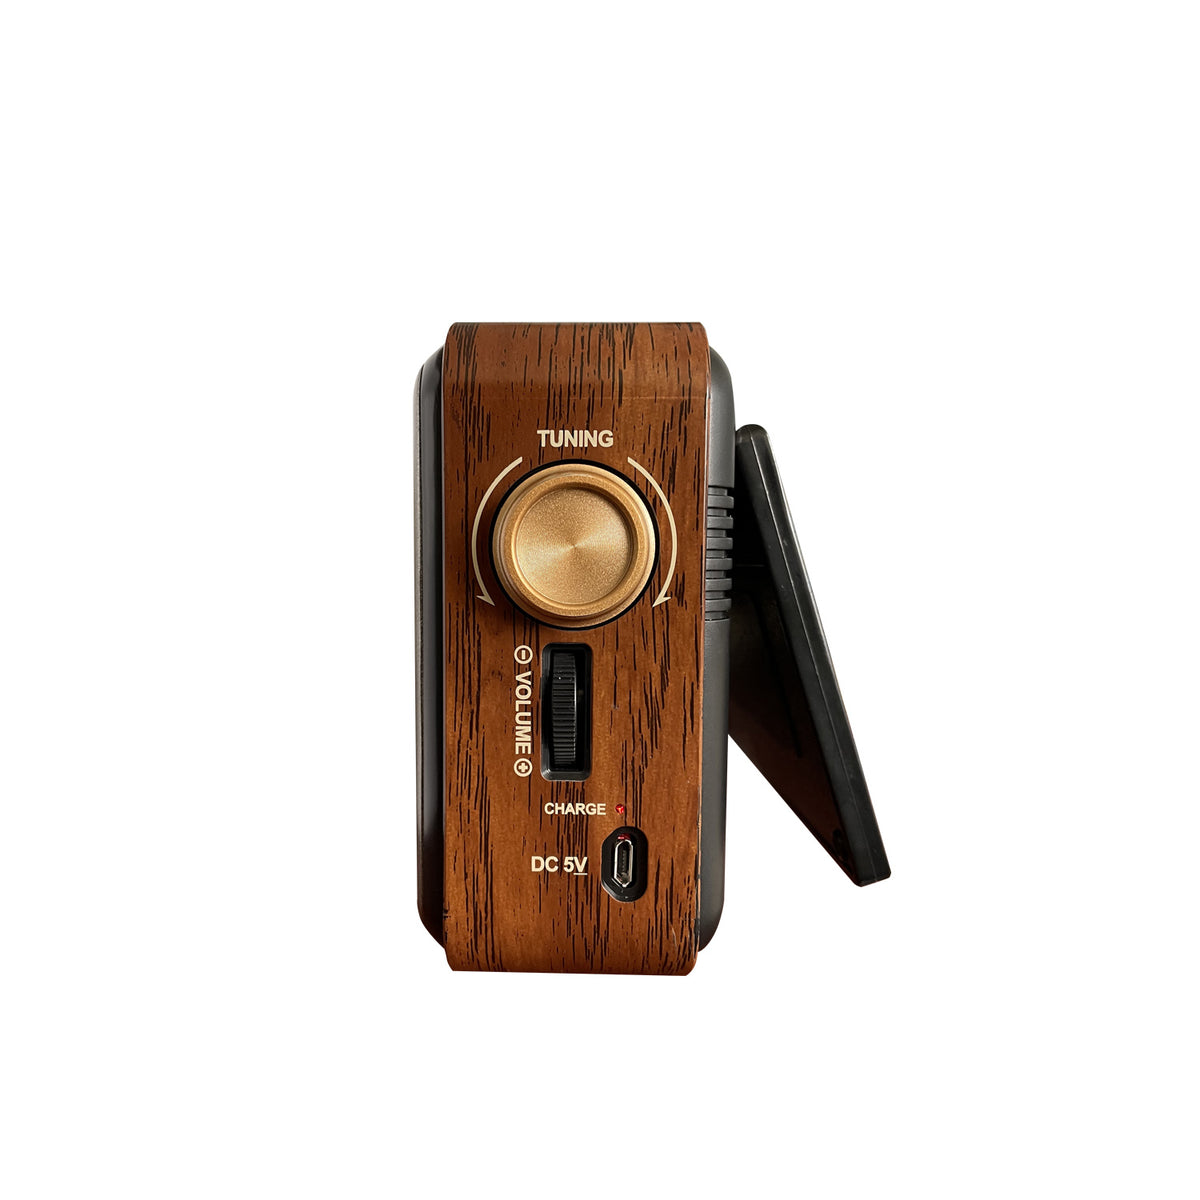 Parlante Radio Bluetooth Vintage Provenze